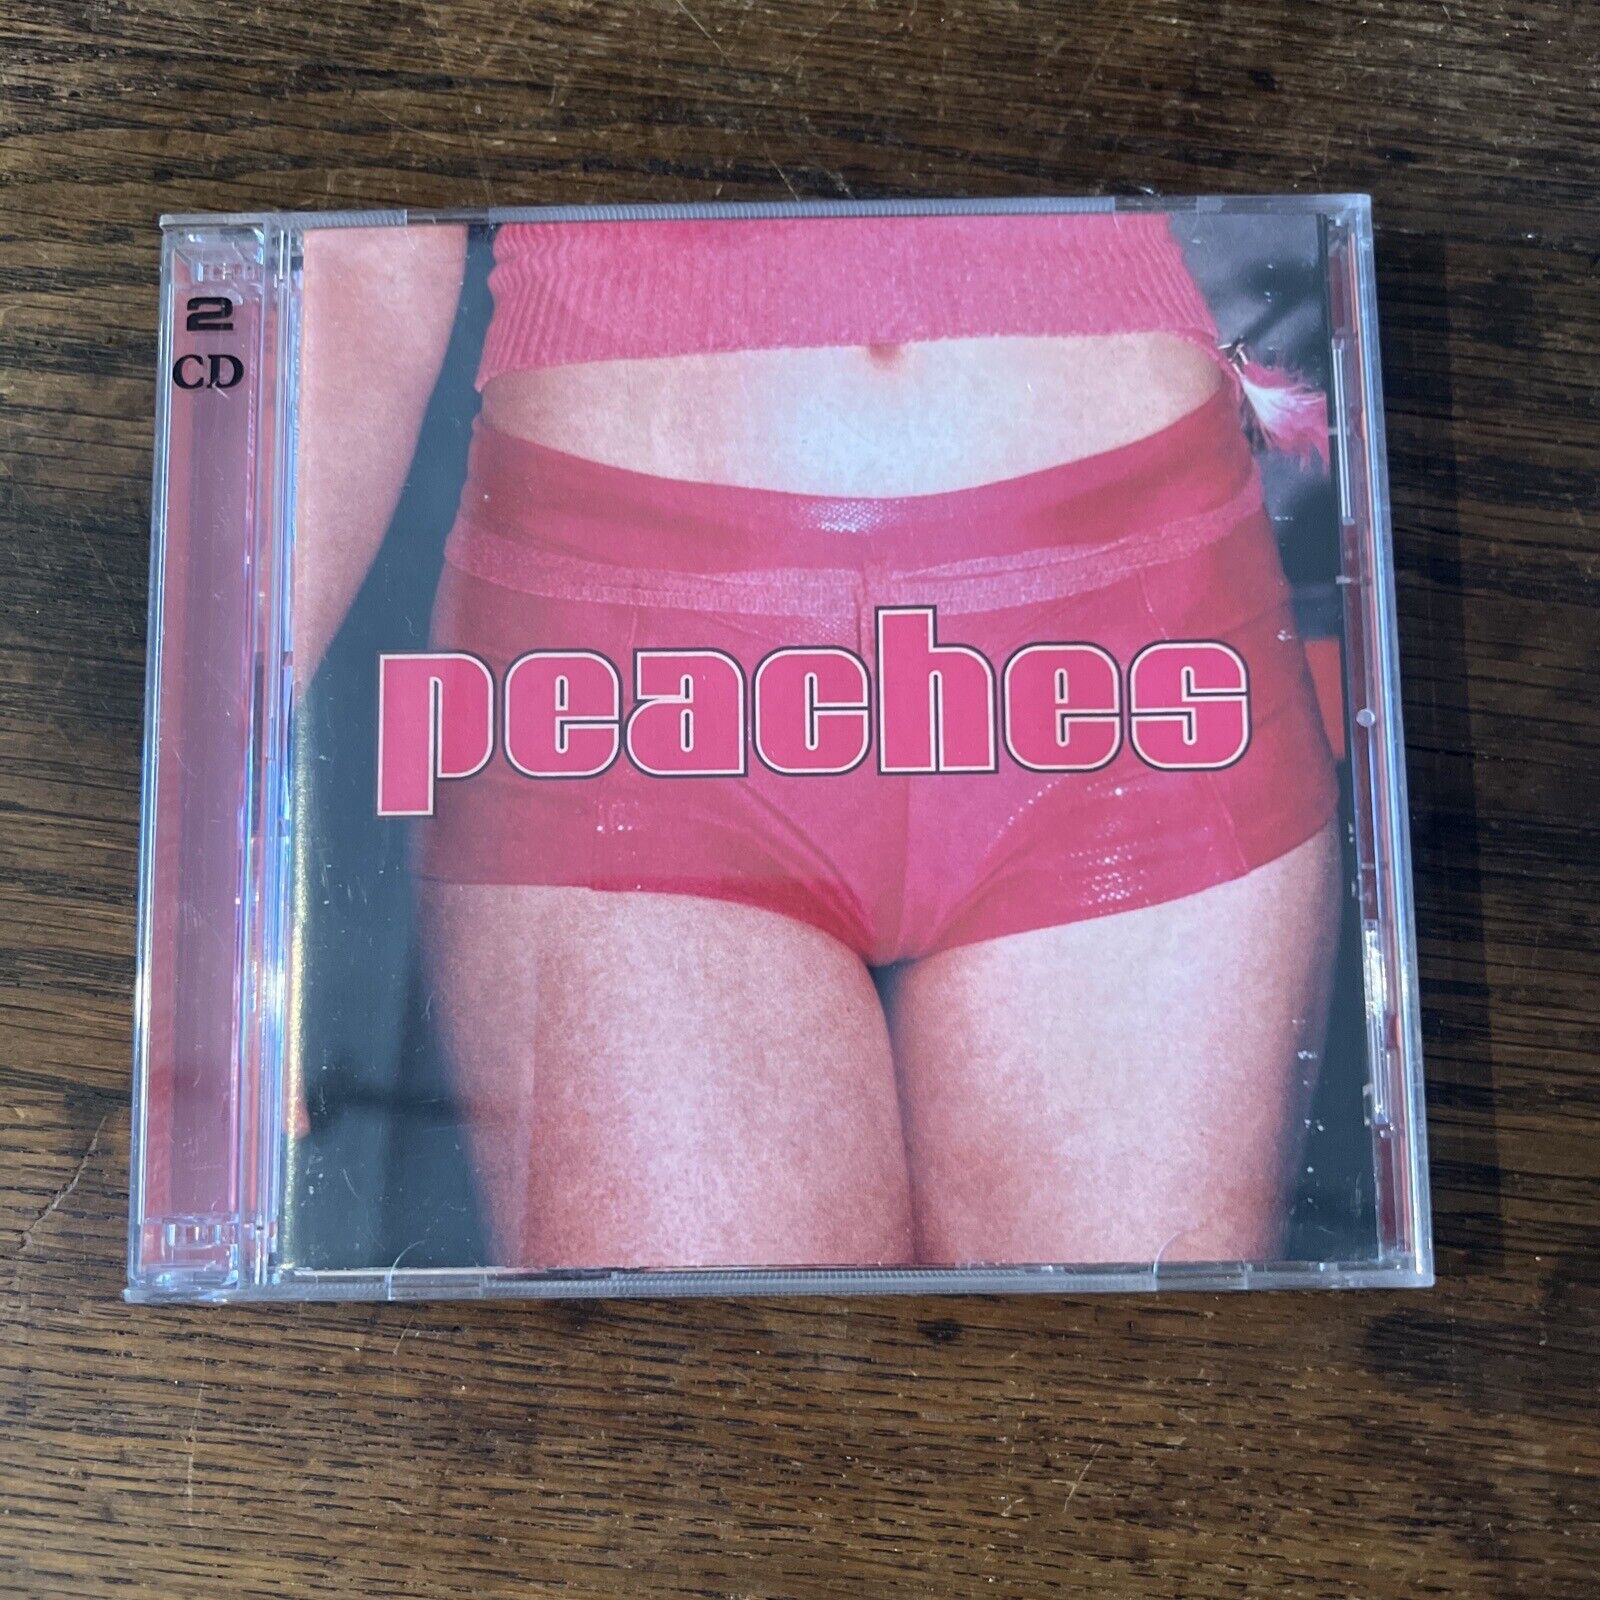 Teaches of Peaches (Audio CD) Vintage Good Condition CD